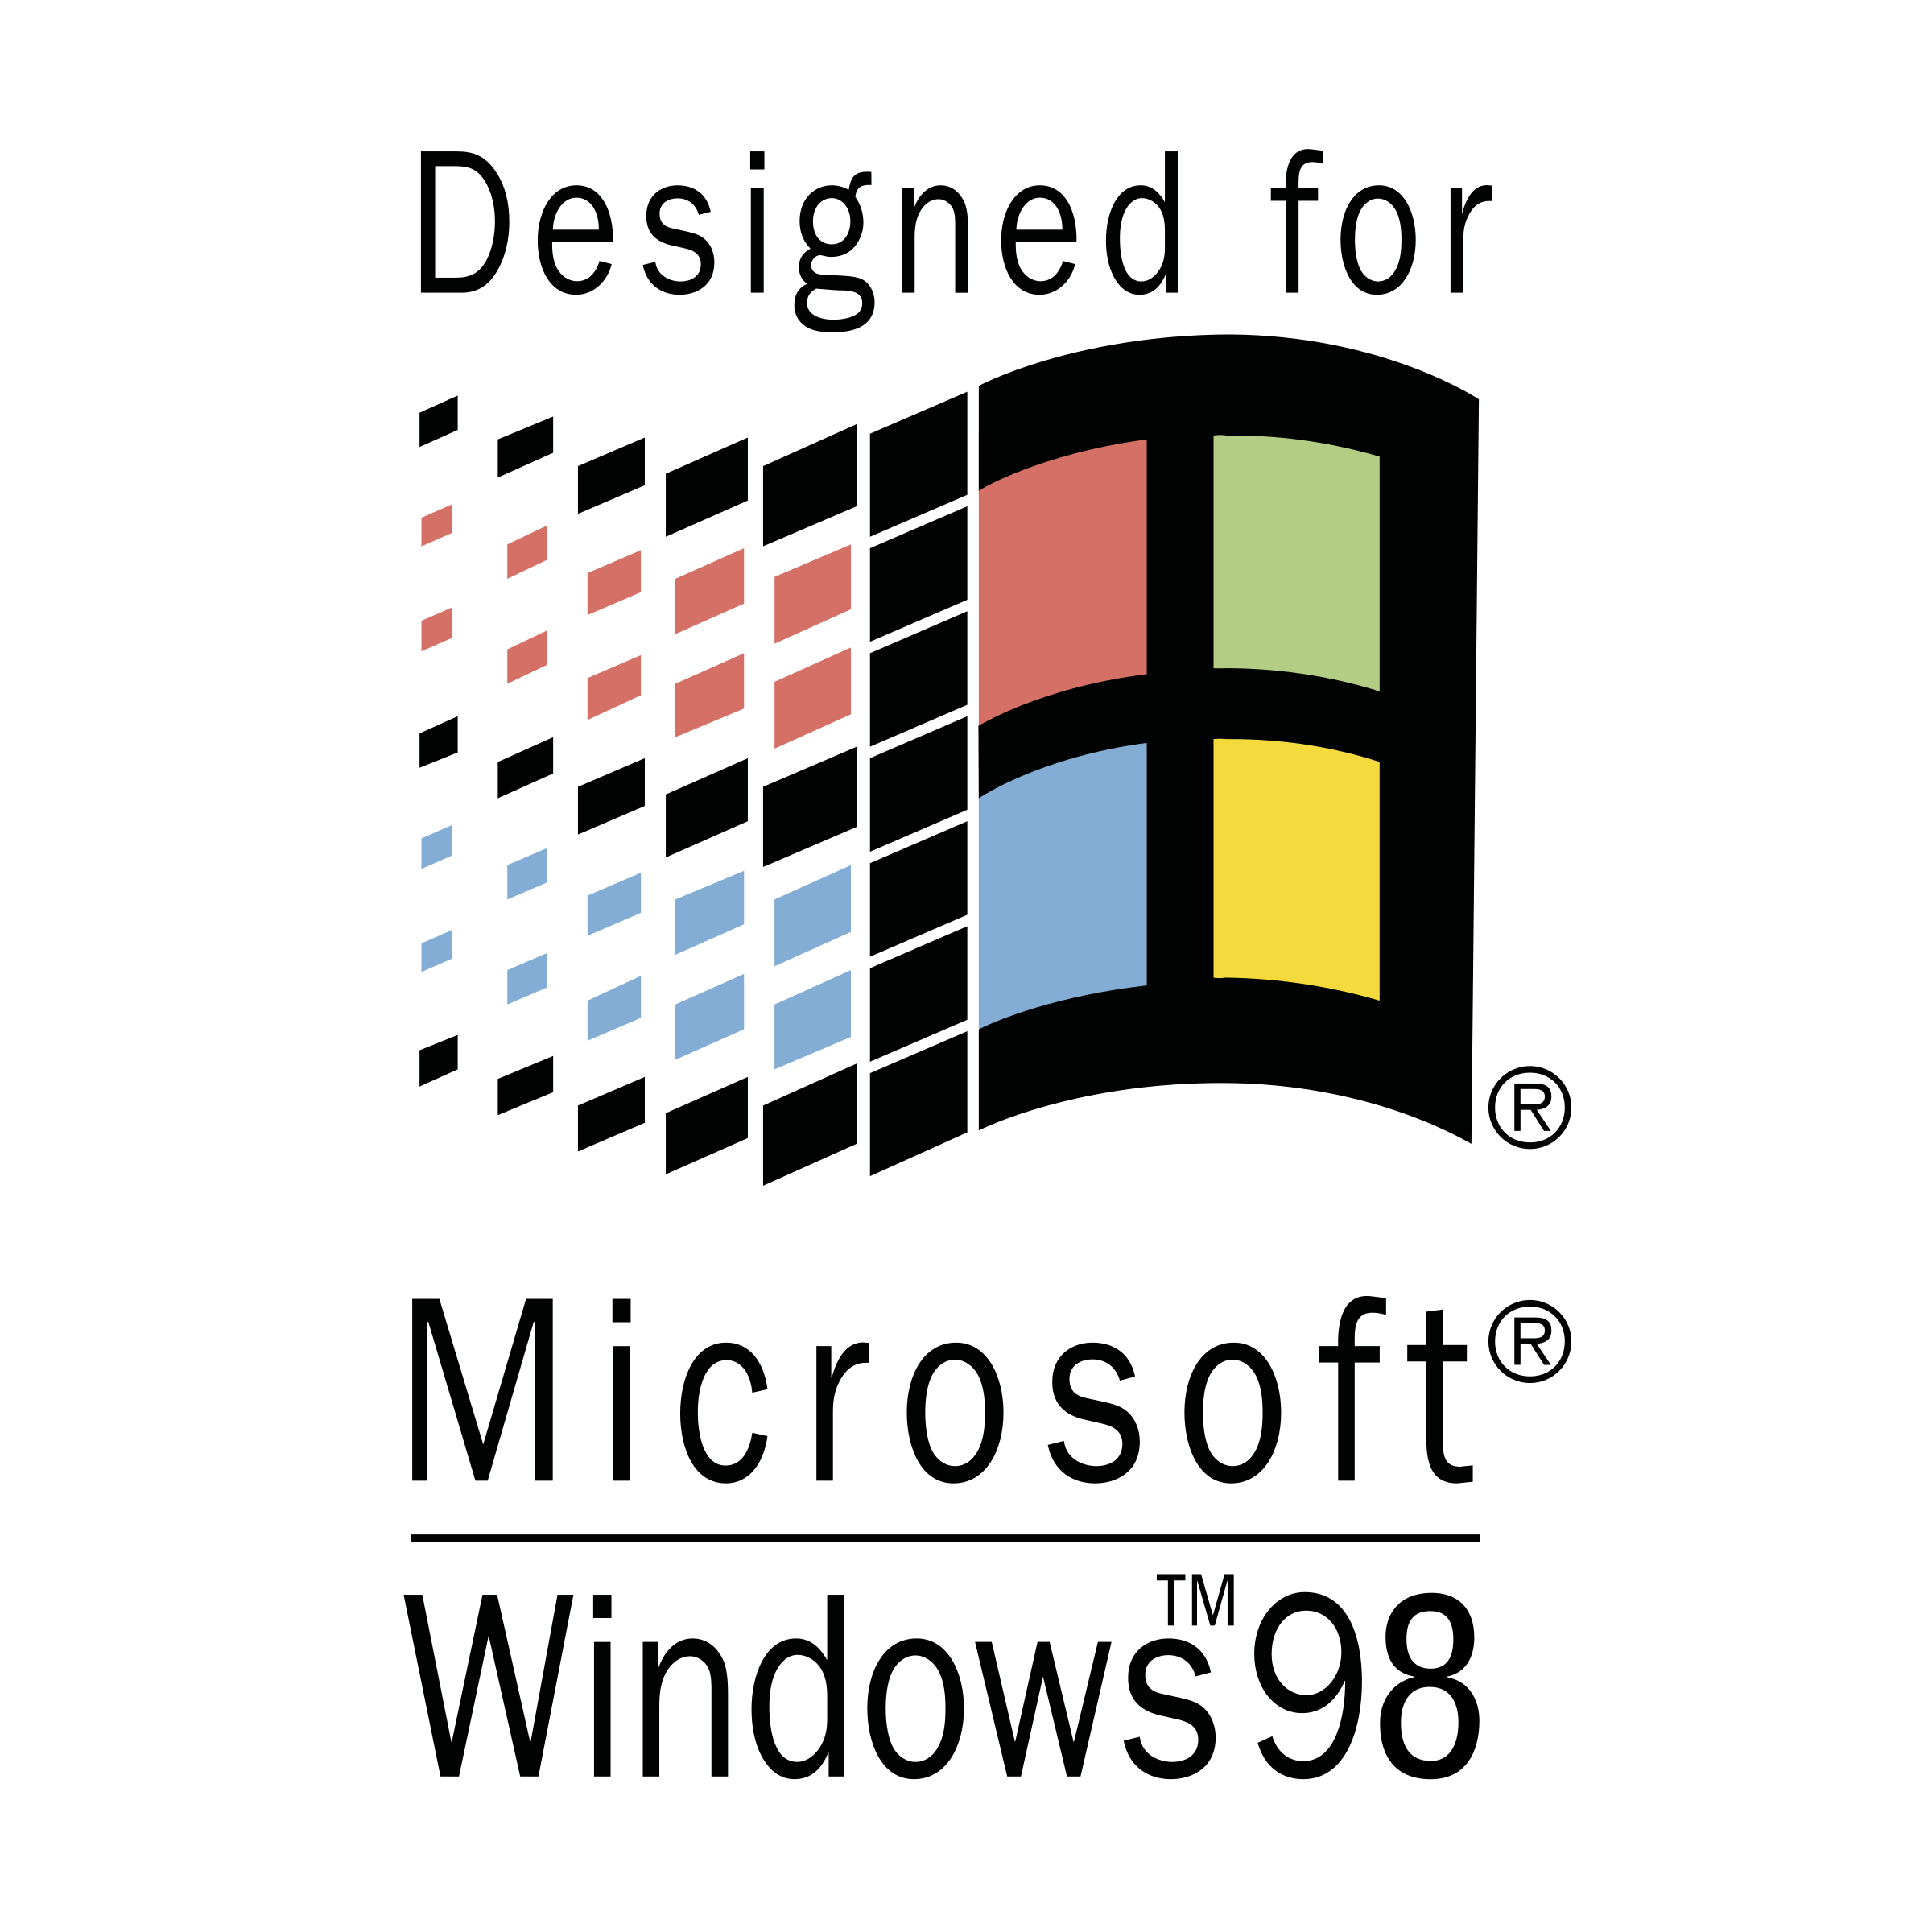 Windows 98 Logo - Designed for Microsoft Windows 98 Logo PNG Transparent & SVG Vector ...